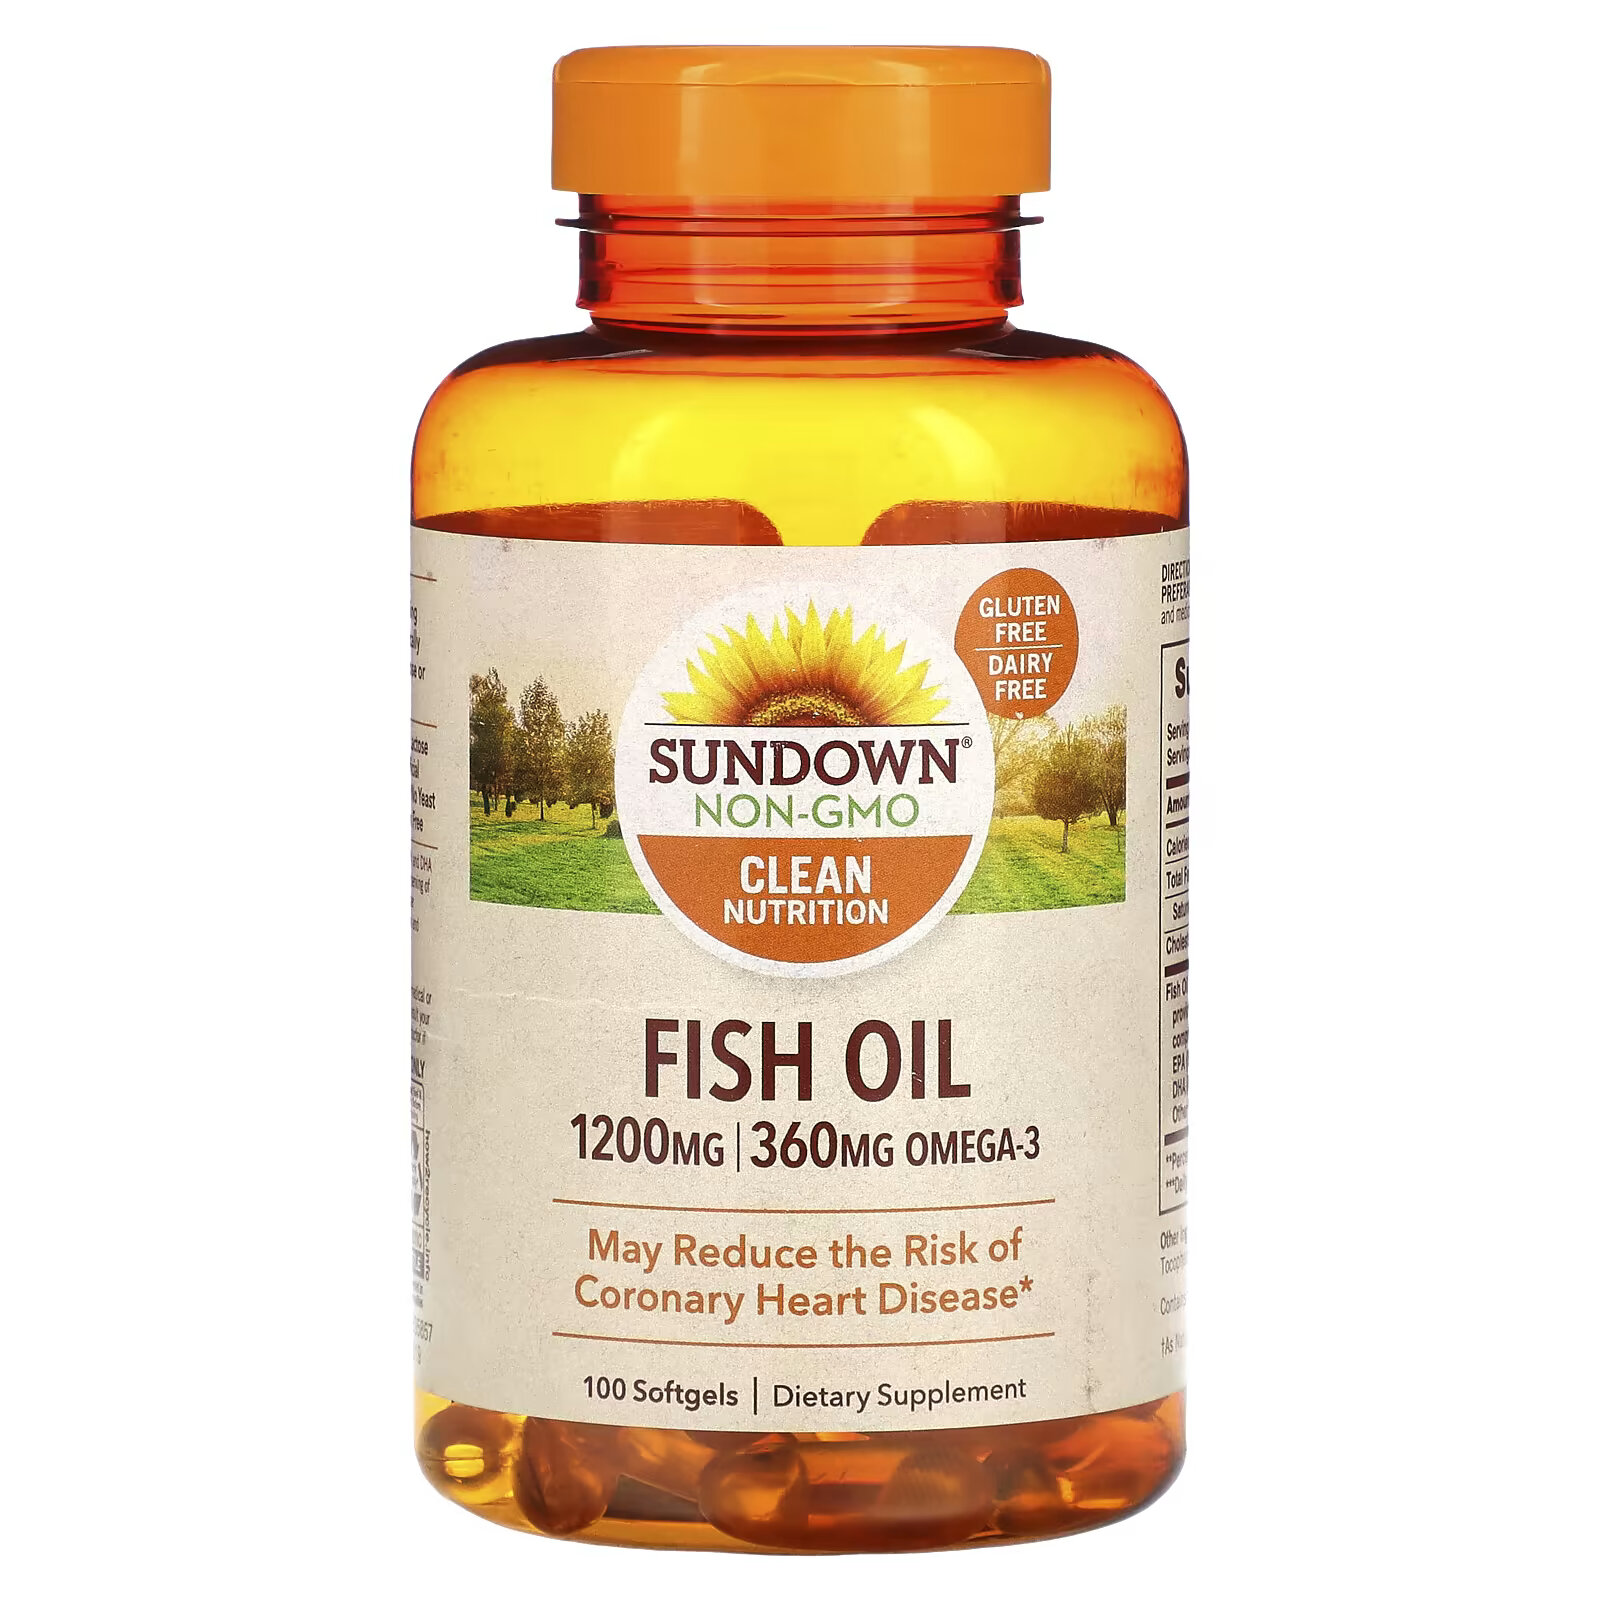 Sundown Naturals, Рыбий жир, 1200 мг, 100 мягких таблеток